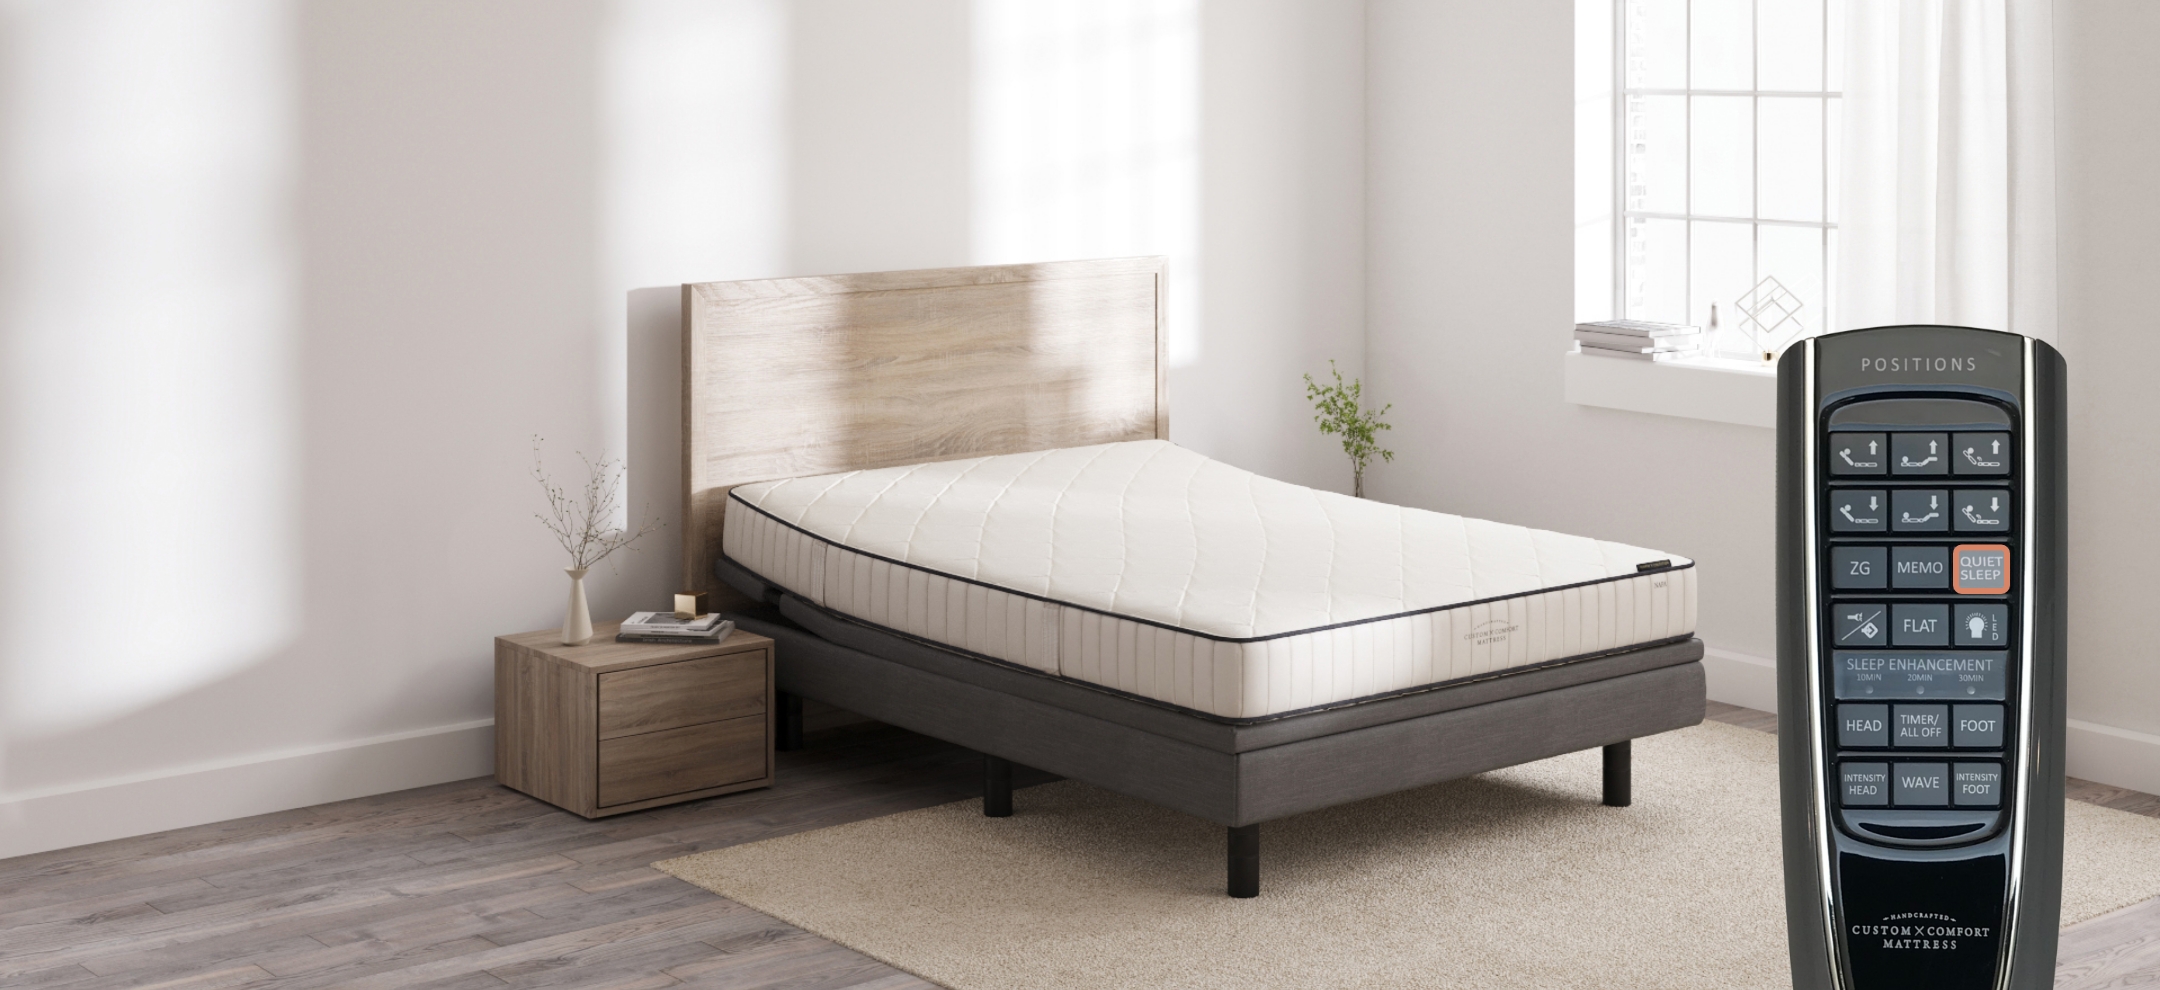 Custom Comfort A-400 – Deck-on-Rail Premium Wireless Adjustable Bed A400 quiet sleep